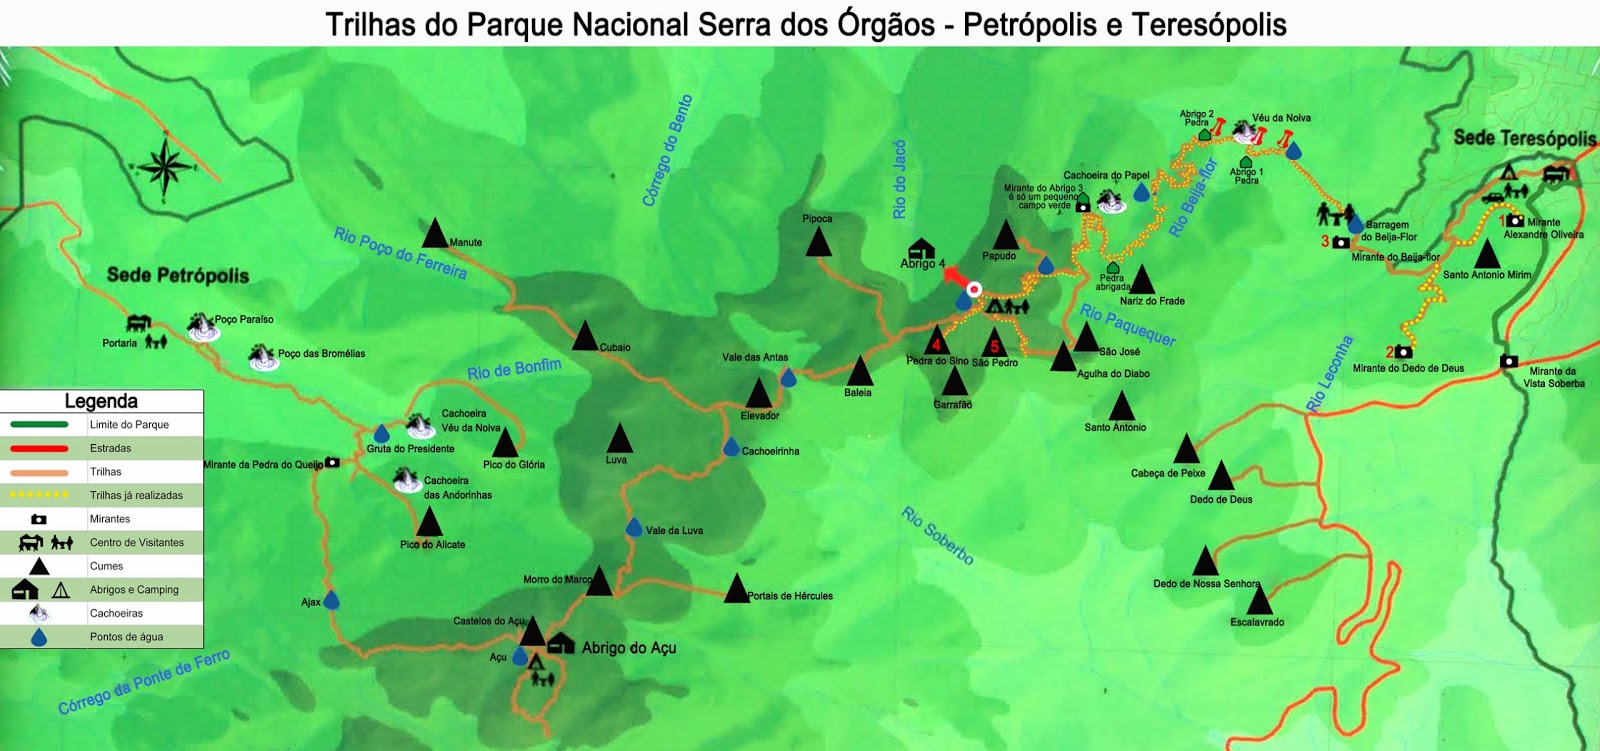 Trilhar e Mochilar: Travessia Petrópolis x Teresópolis